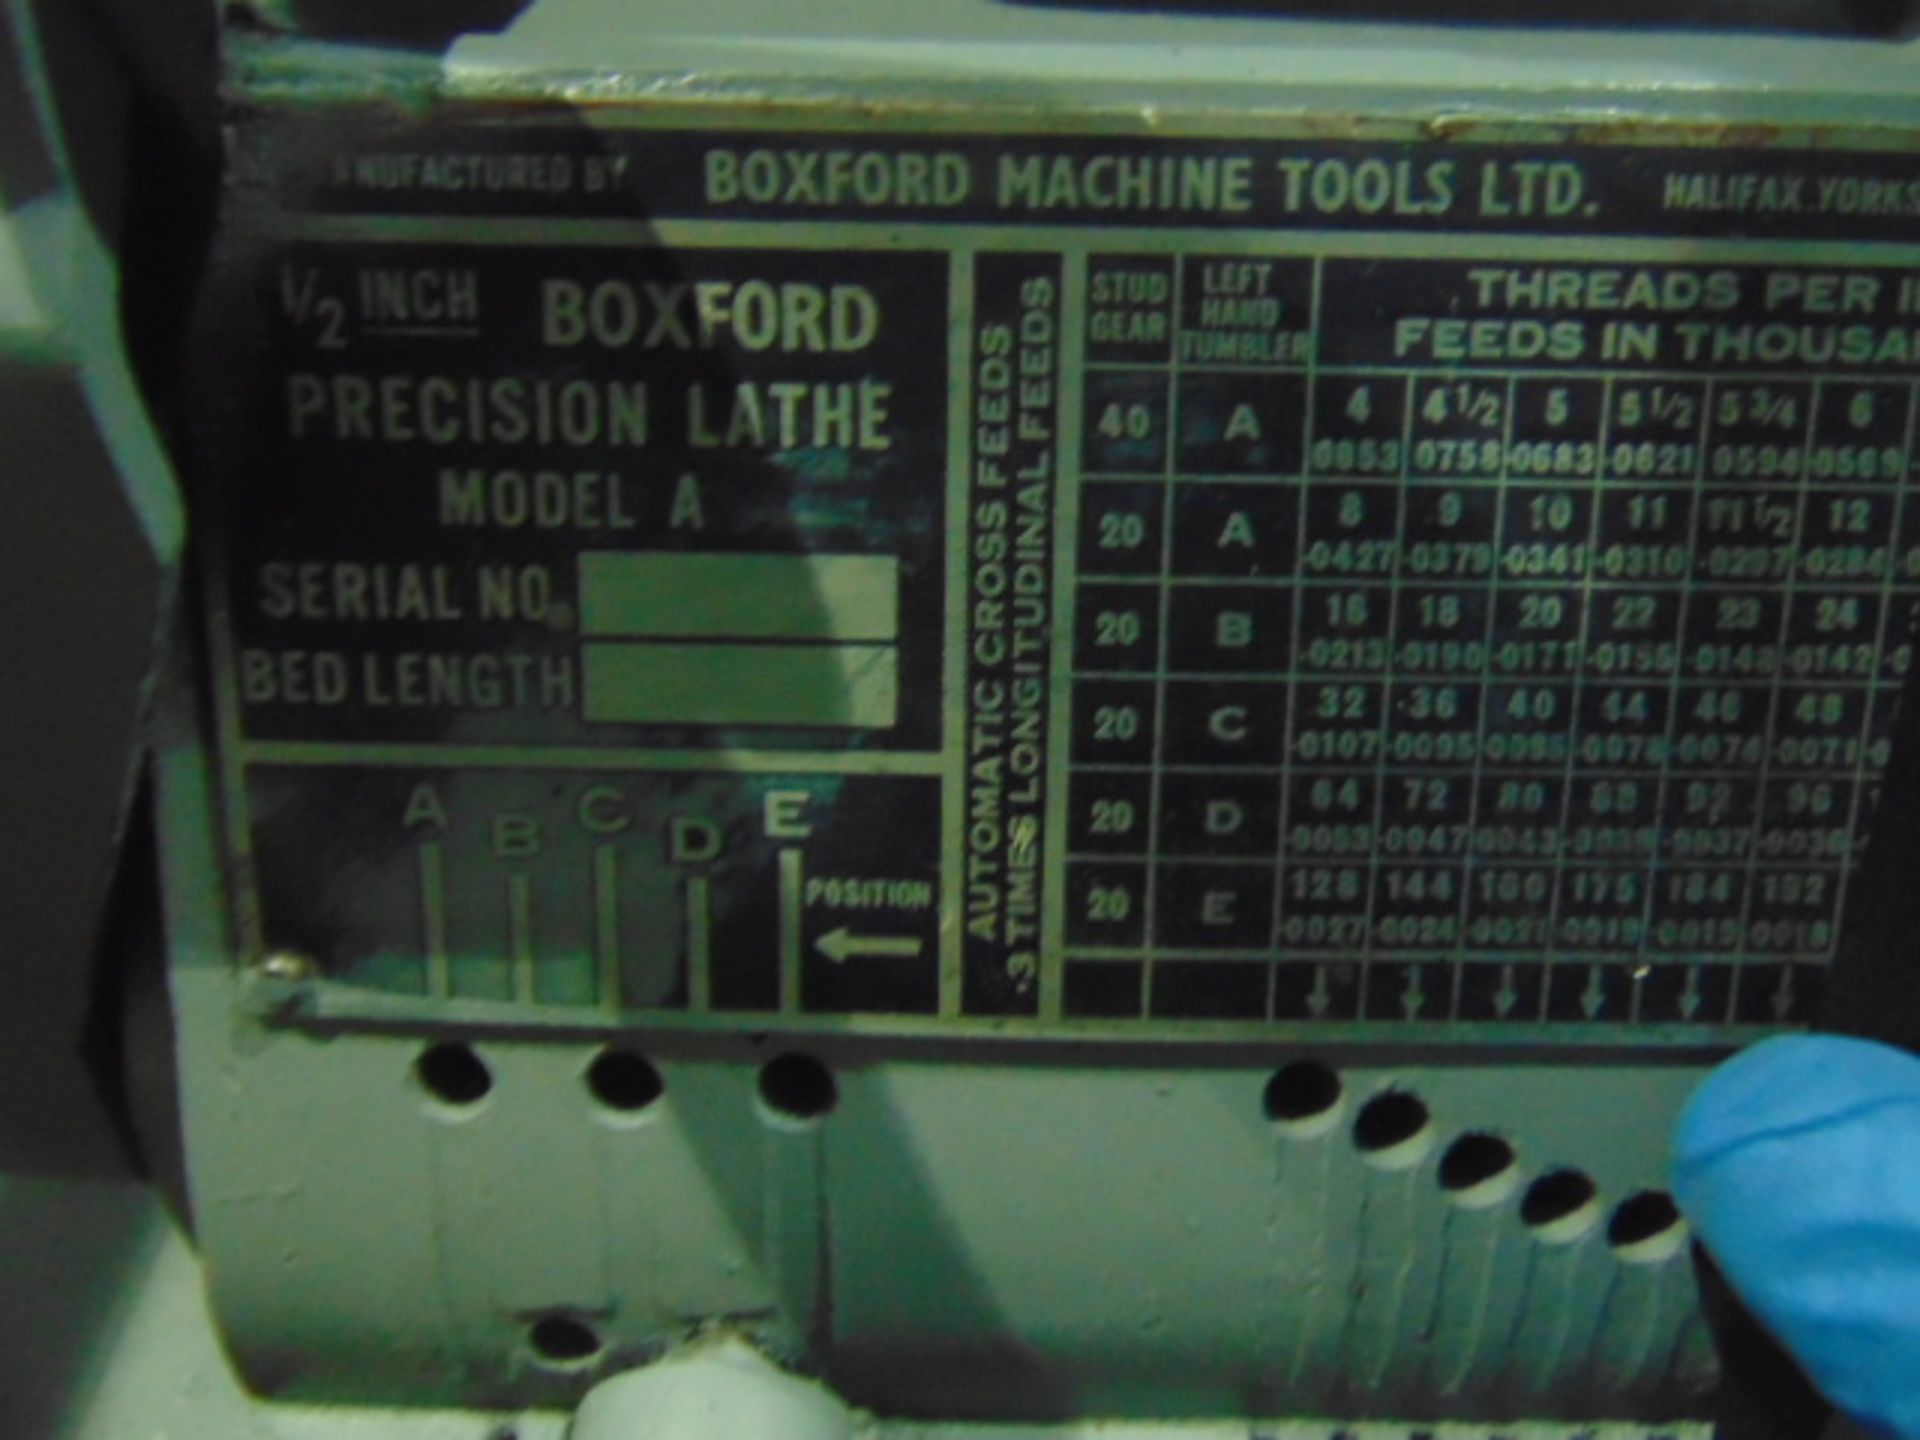 Boxford Precision Lathe Model A - Image 5 of 9